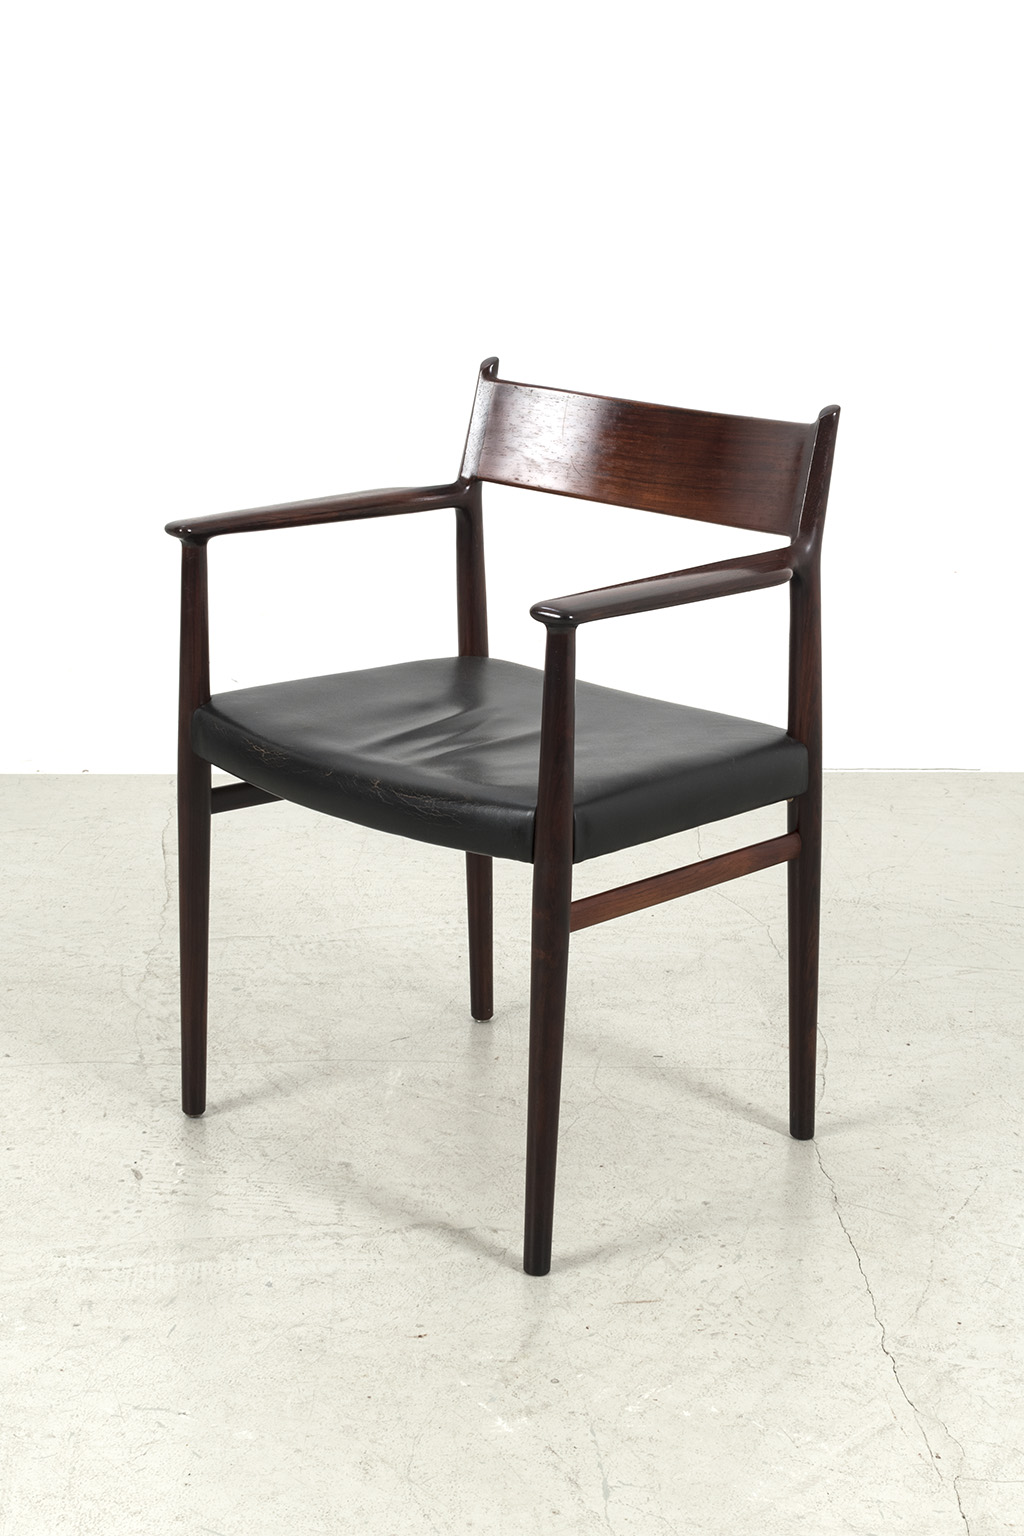 Vintage Danish leather chair